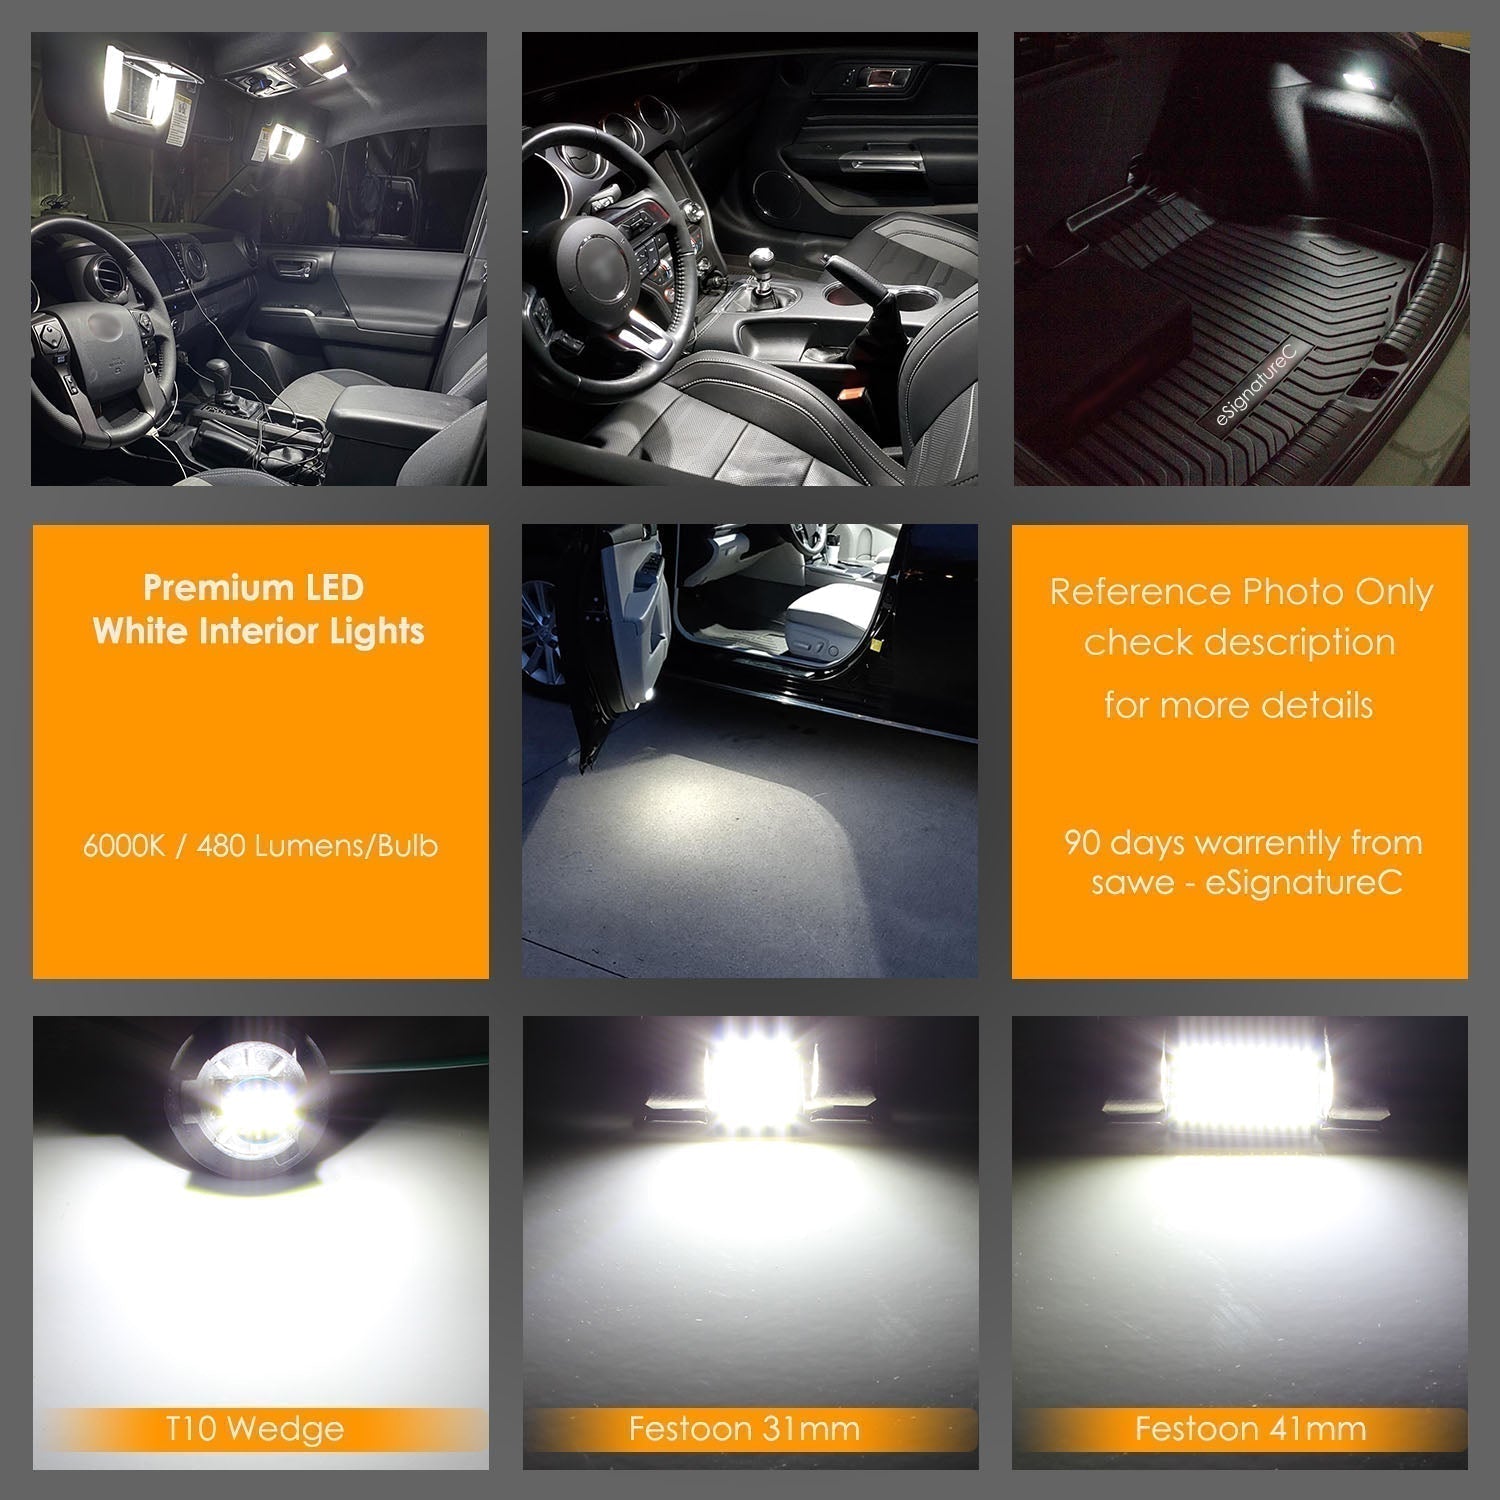 For Volkswagen CC Interior LED Lights - Dome & Map Light Bulbs Package Kit for 2009 - 2017 - White